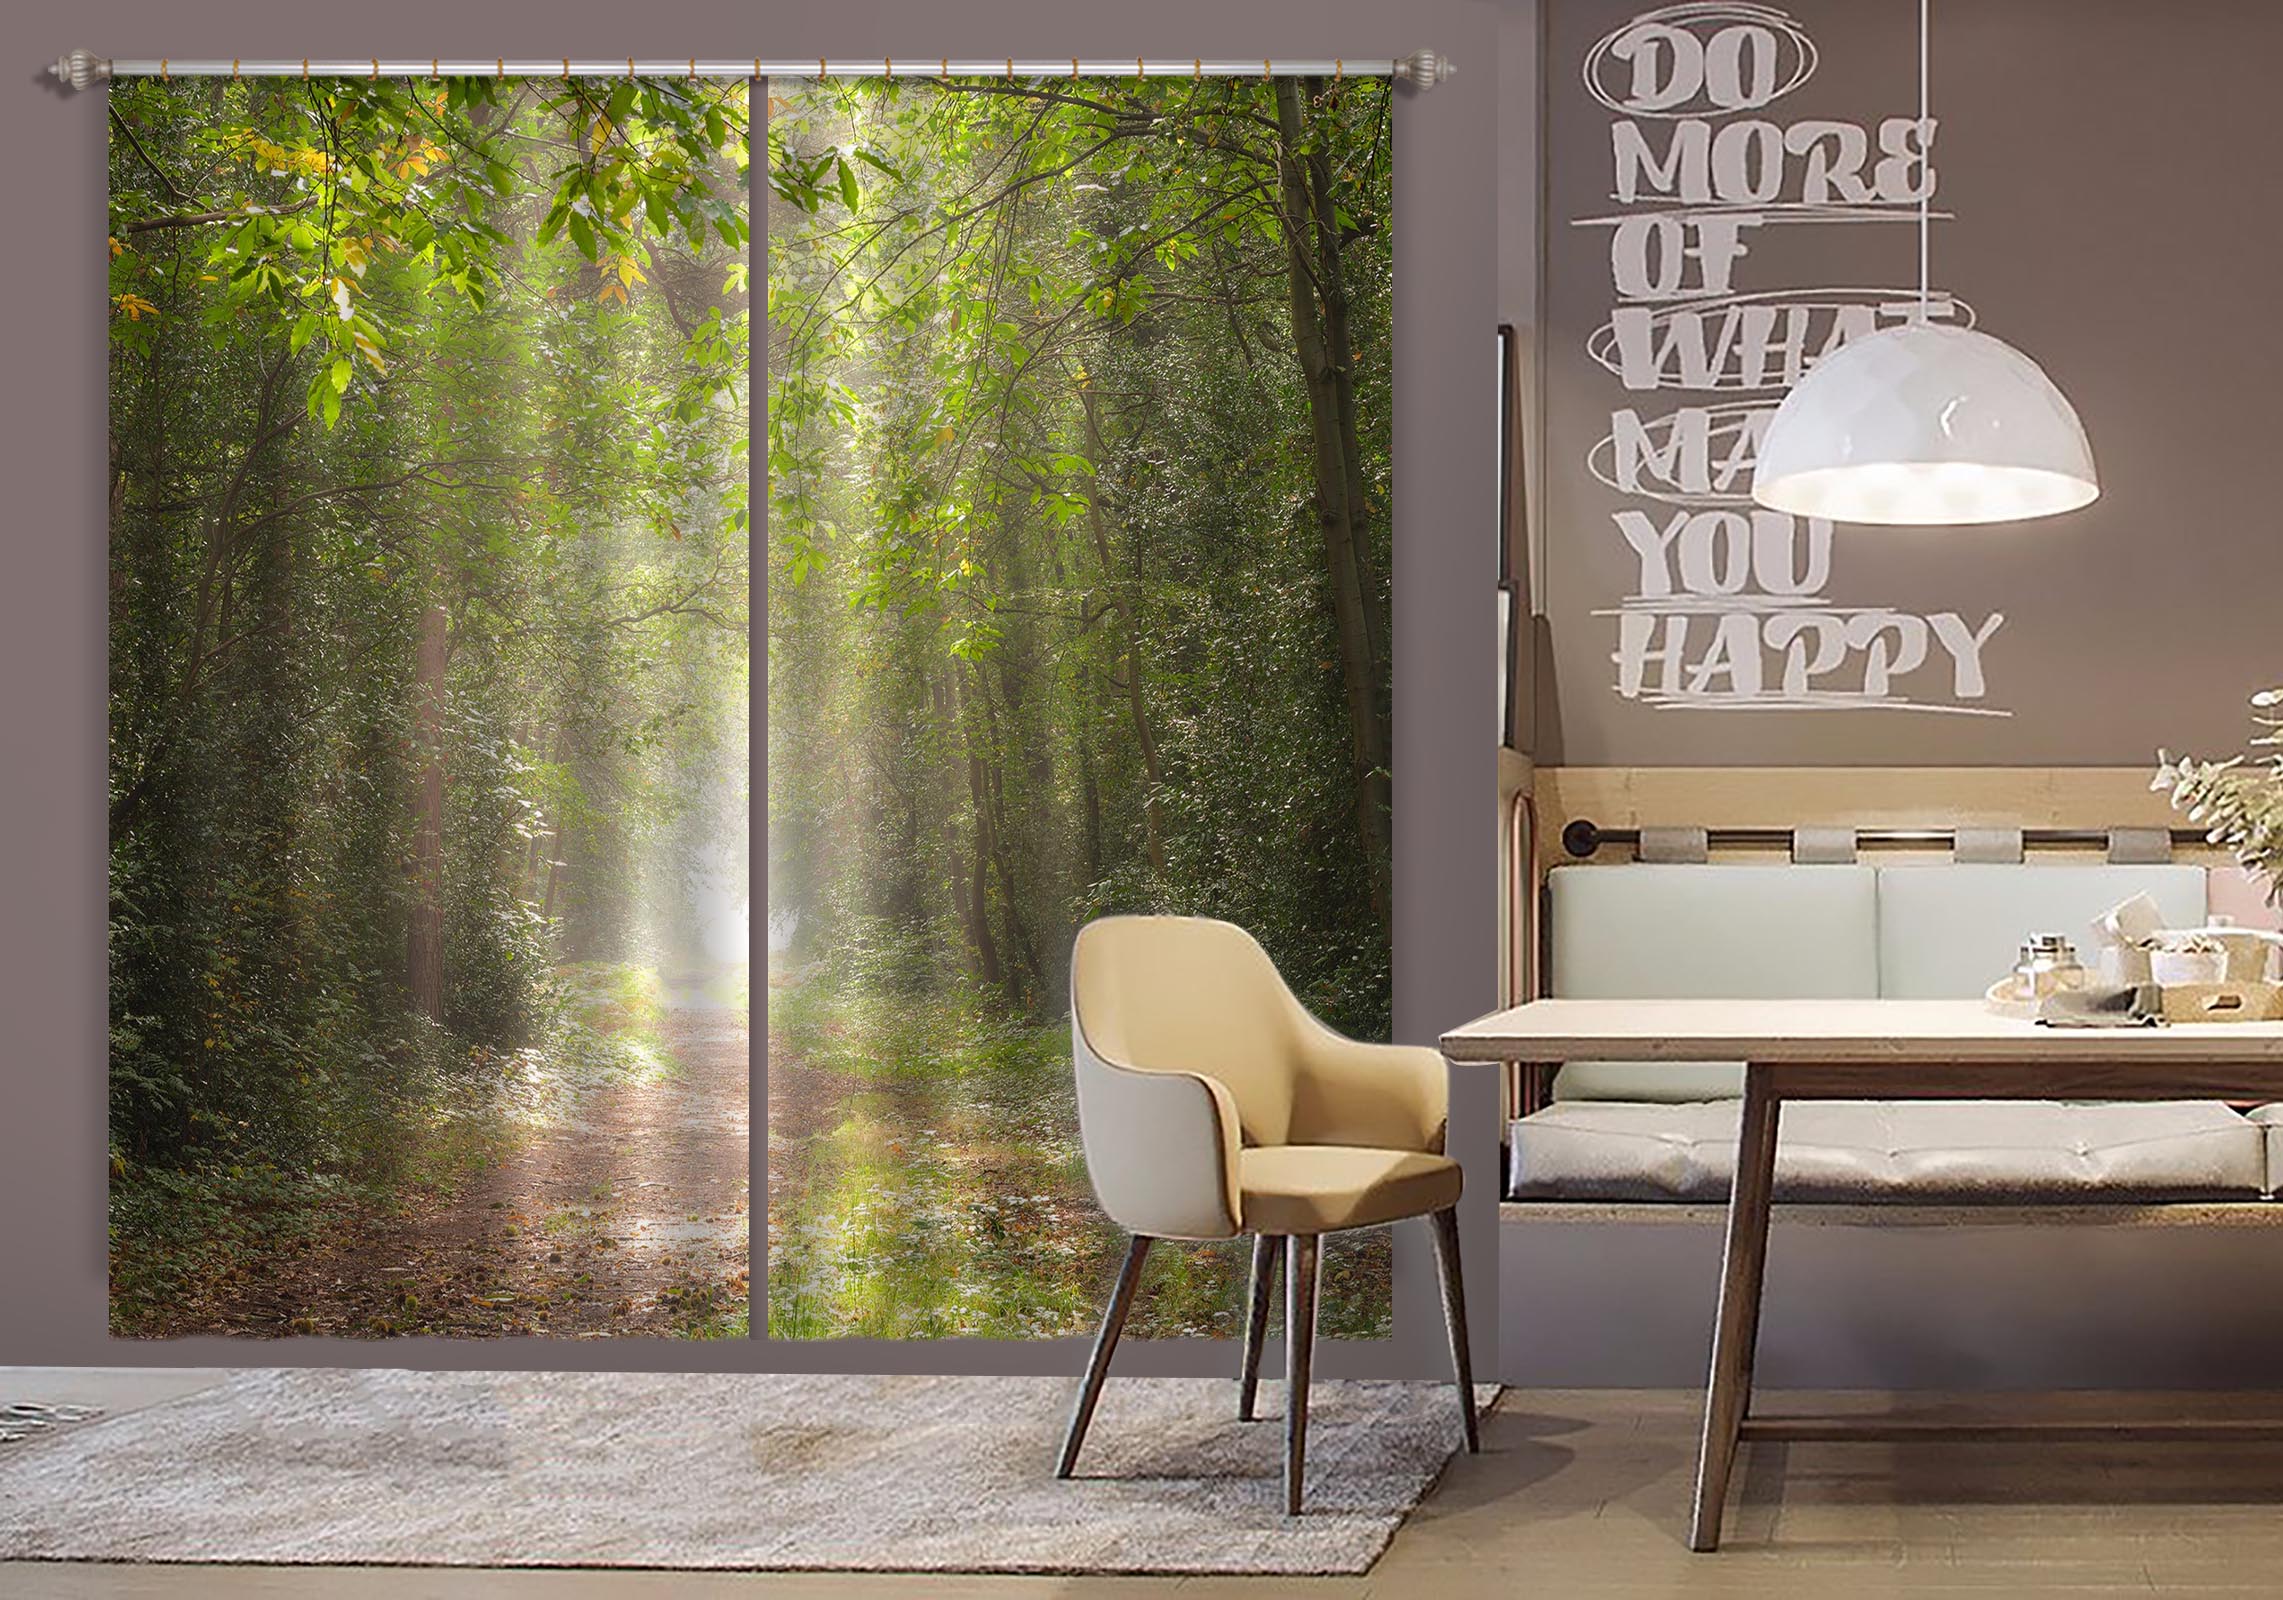 3D Sunshine Trees 6401 Assaf Frank Curtain Curtains Drapes